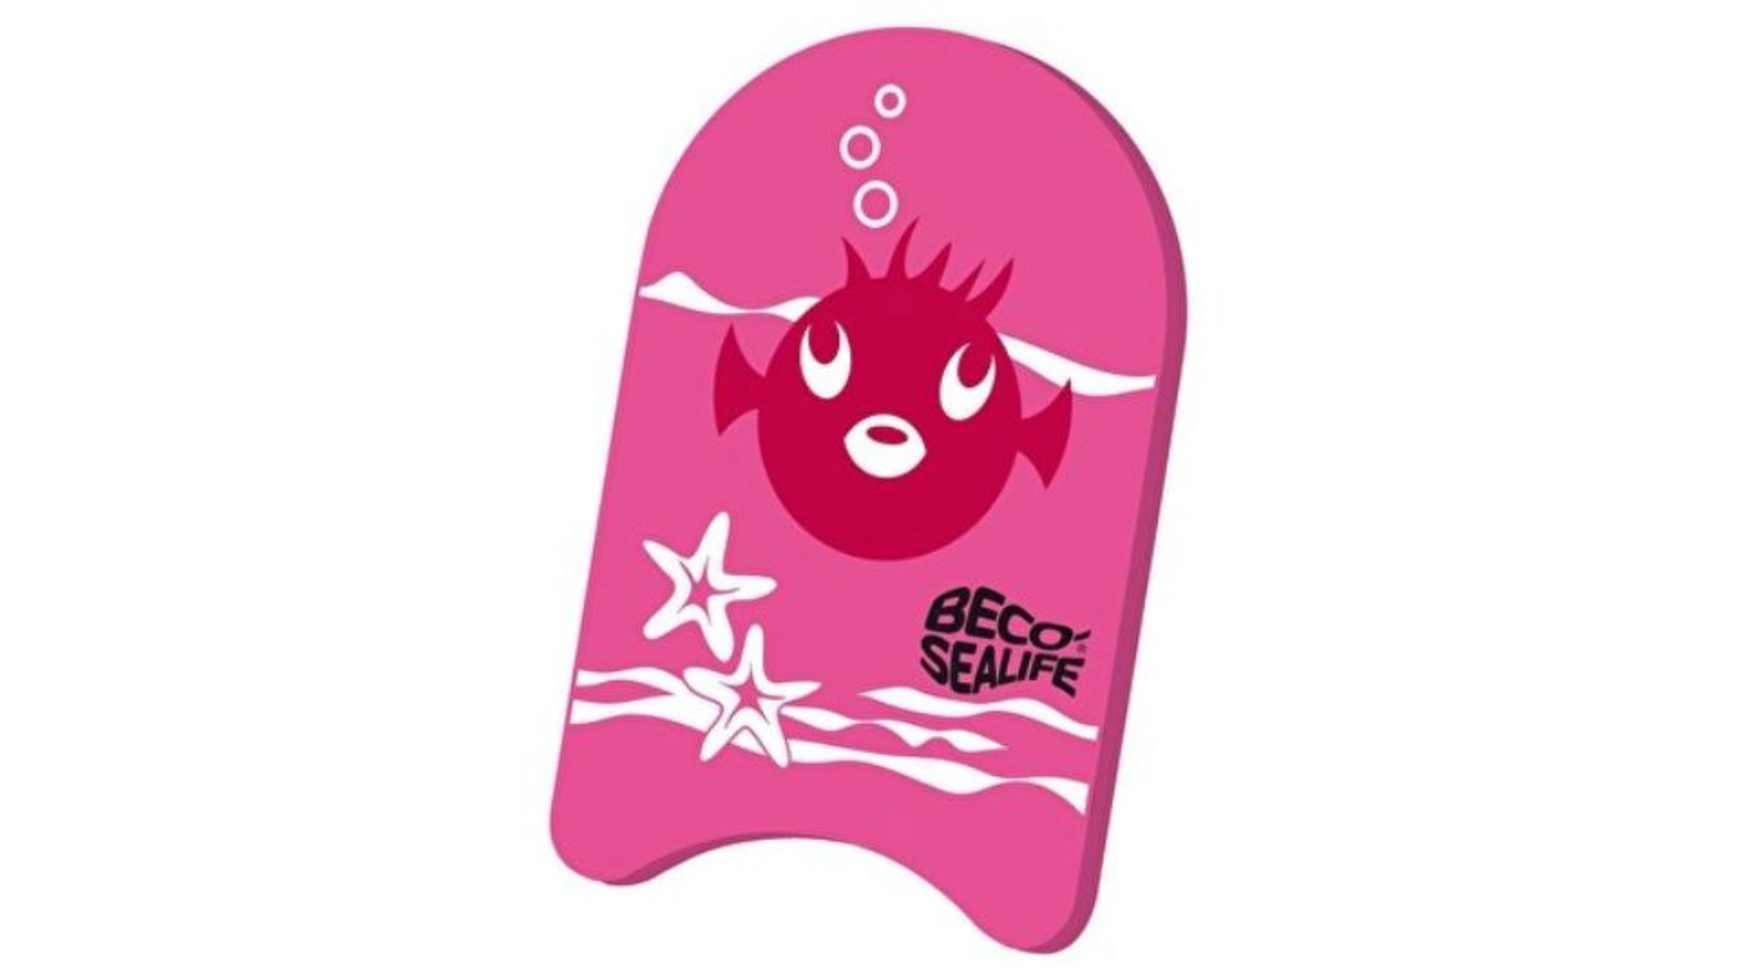 Beco Доска для плавания Sealife, розовая доска для плавания детская beco kickboard sealifе розовая